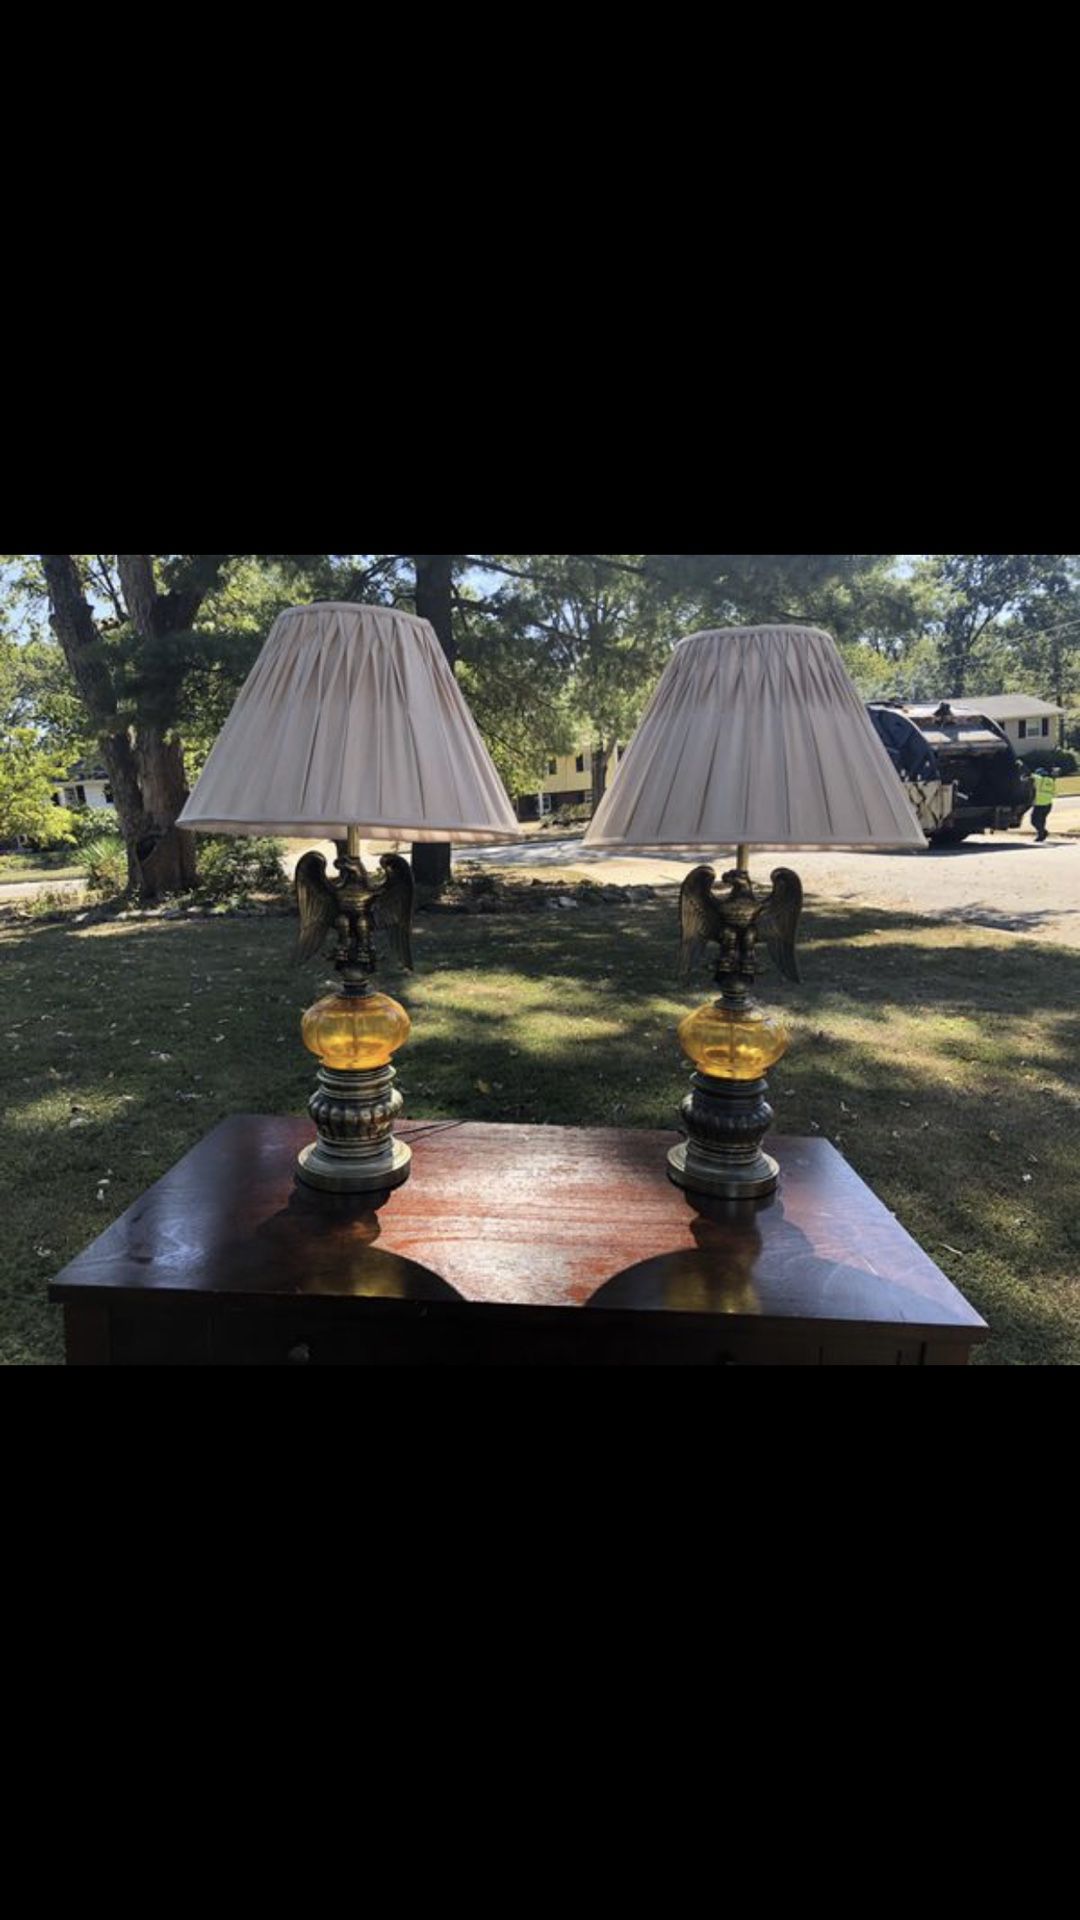 Two vintage eagle lamps